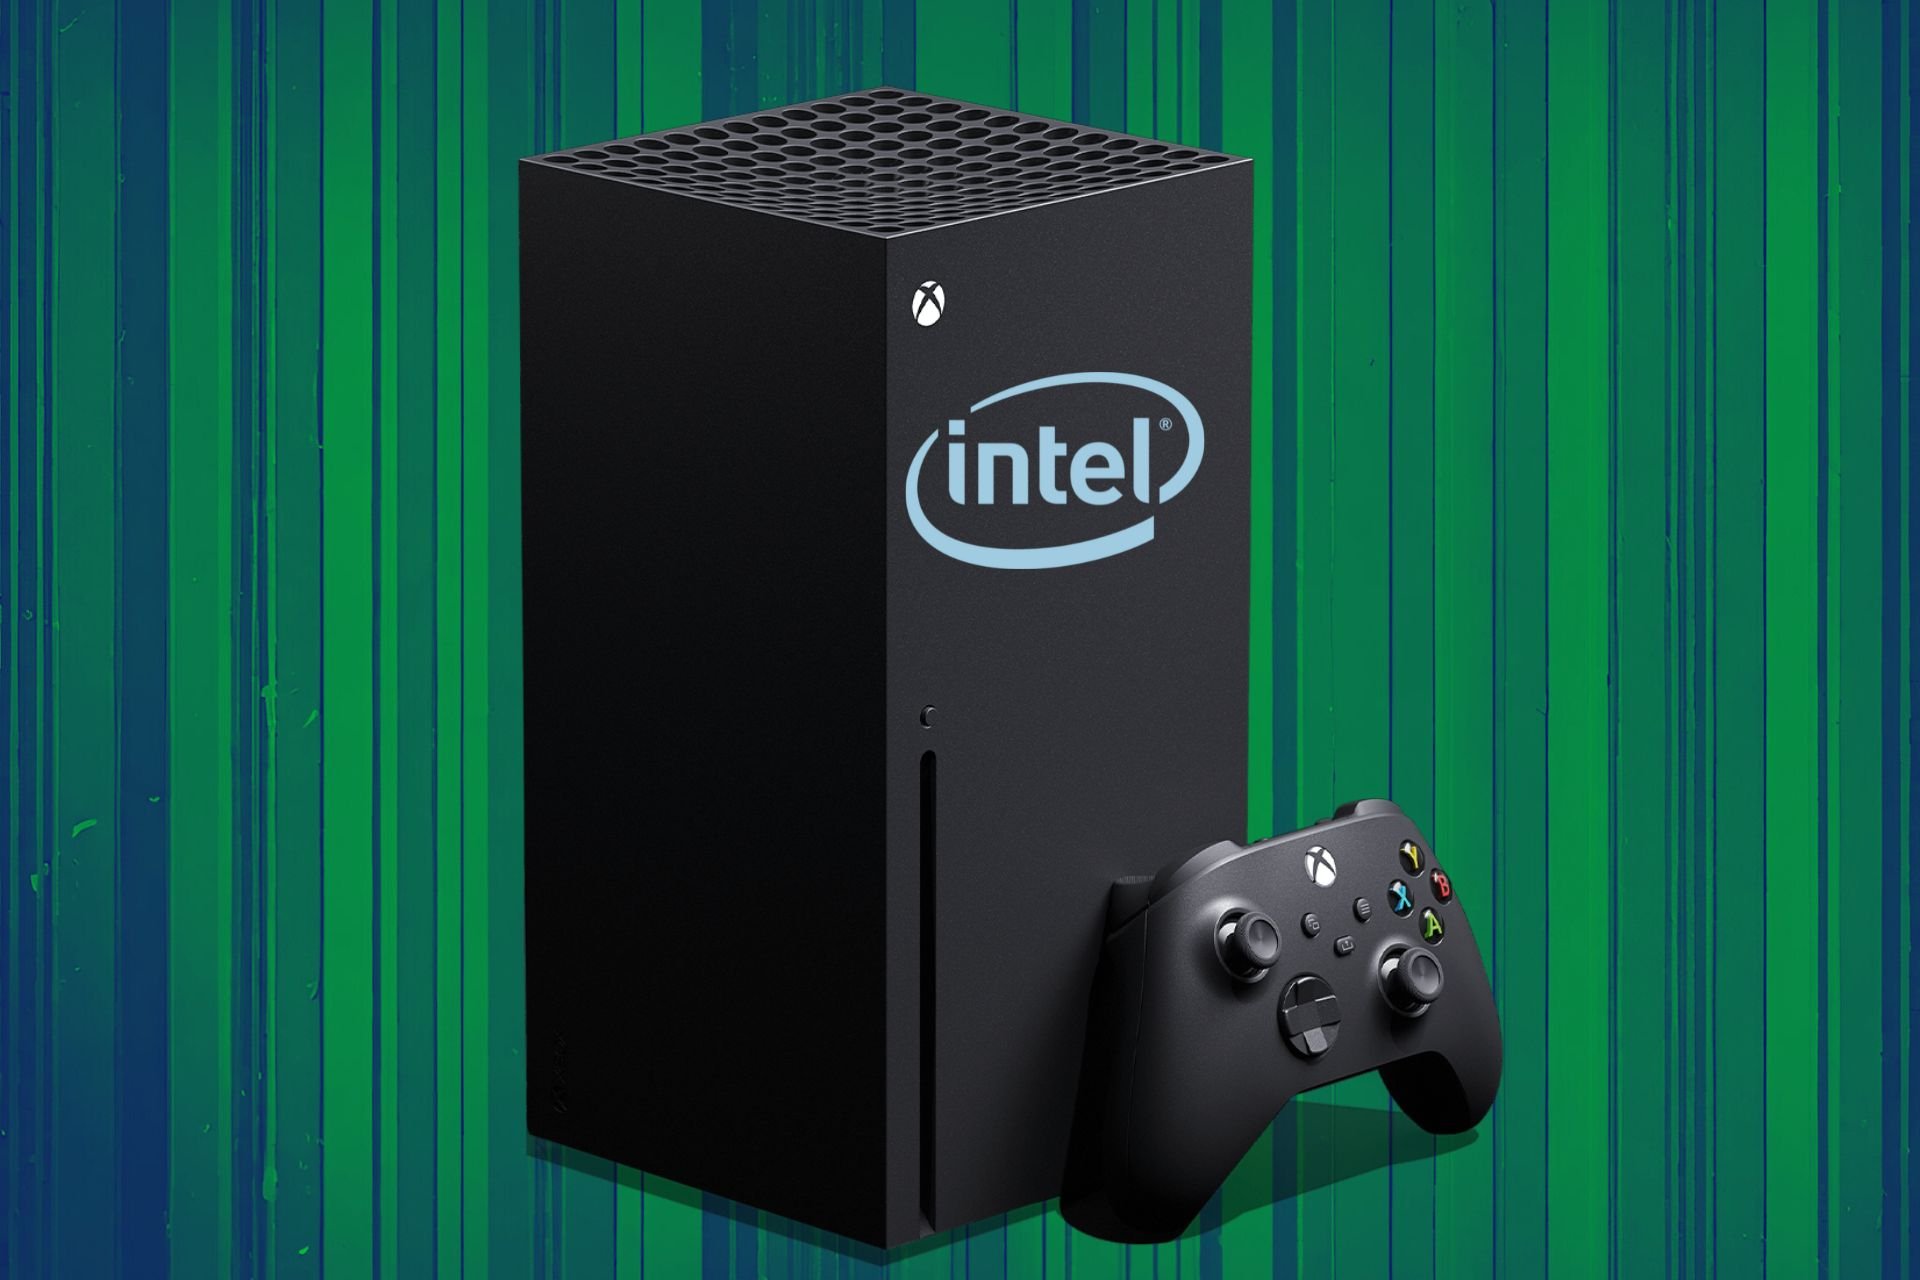 Xbox series X with an Intel logo